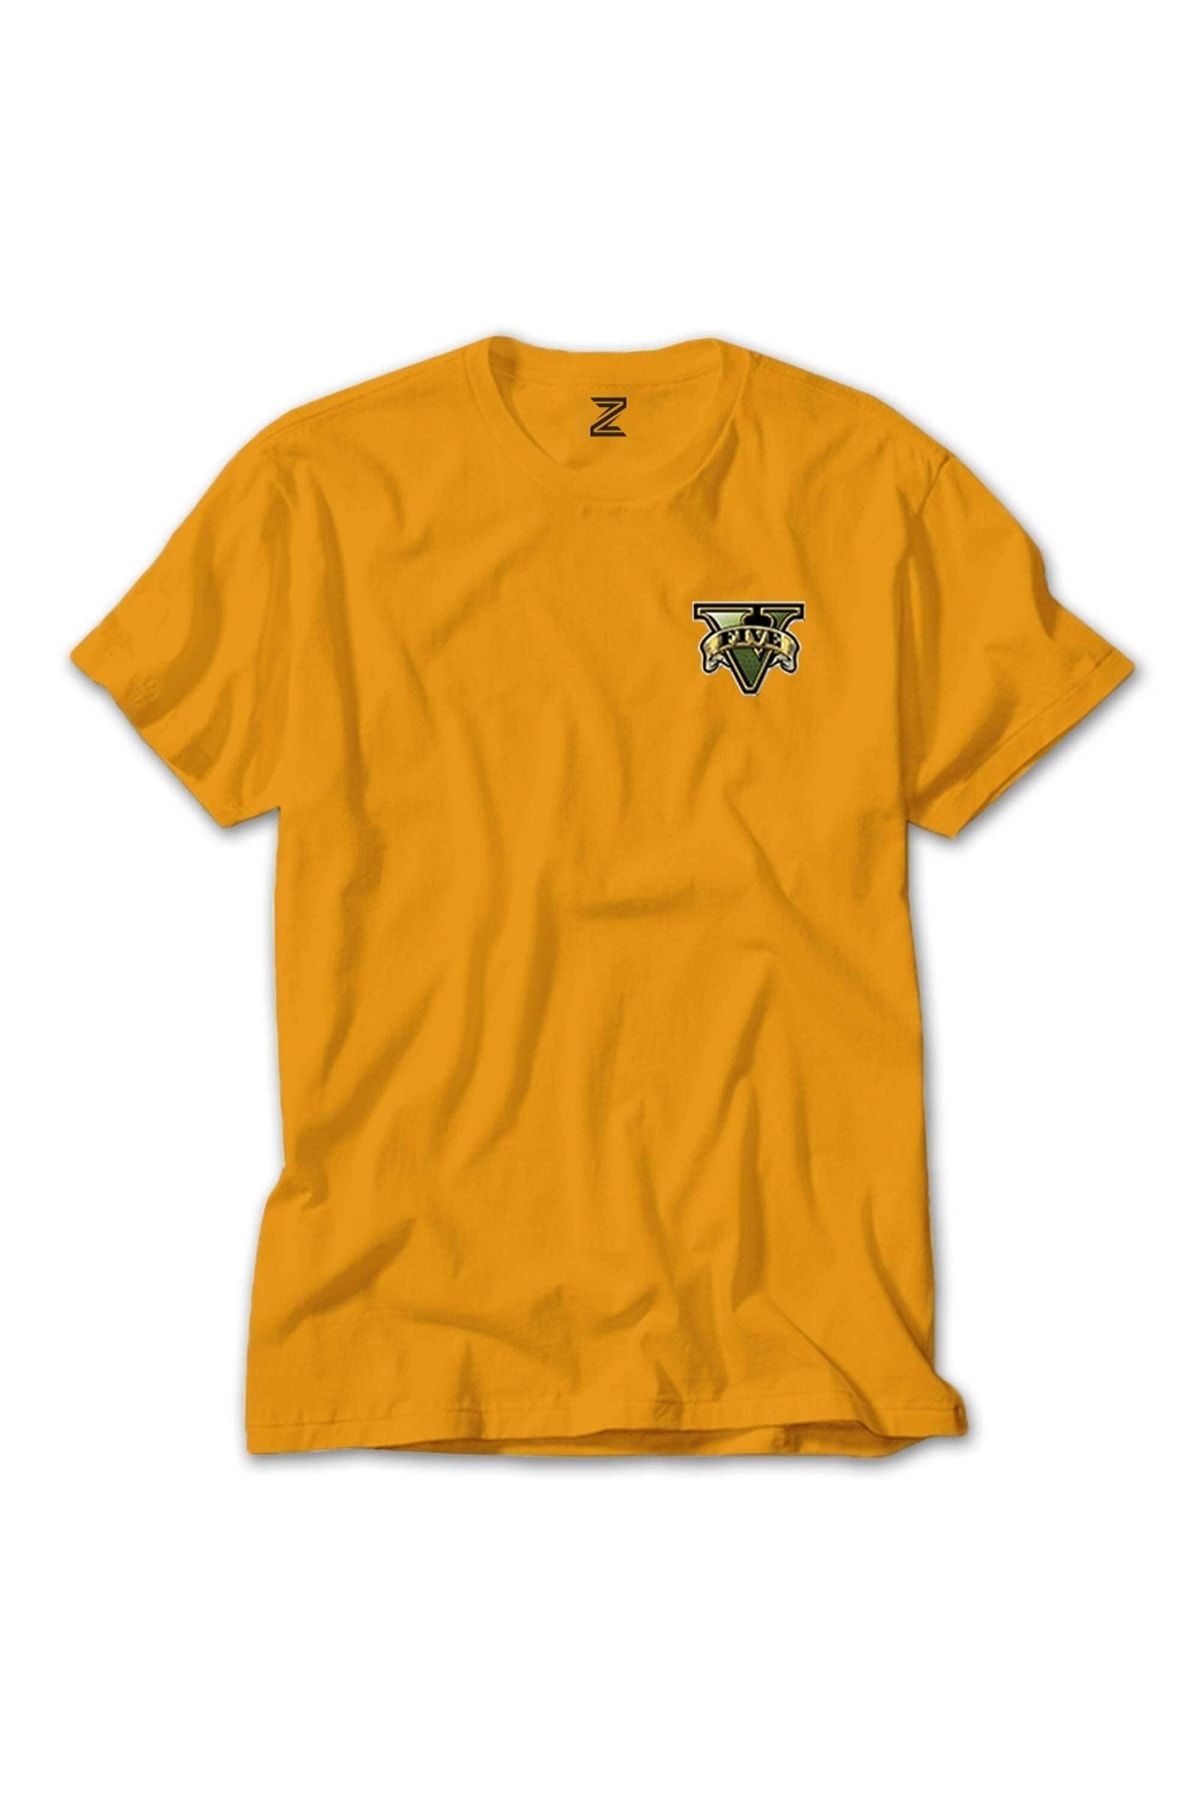 Z zepplin Gta Five Green Logo Sarı Tişört